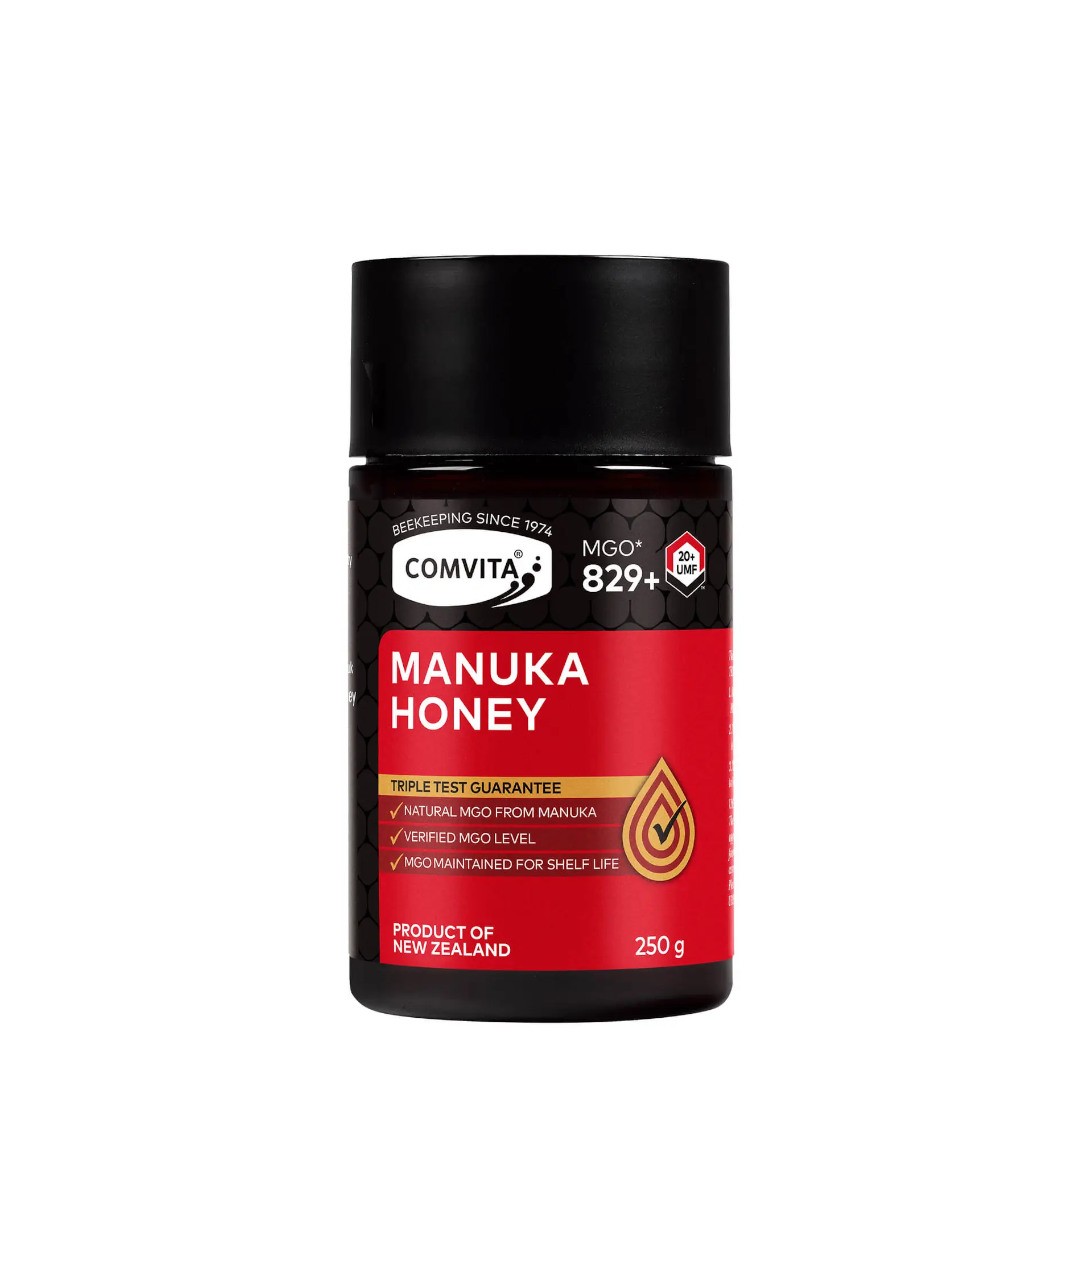 UMF™ 20+ Mānuka Honey